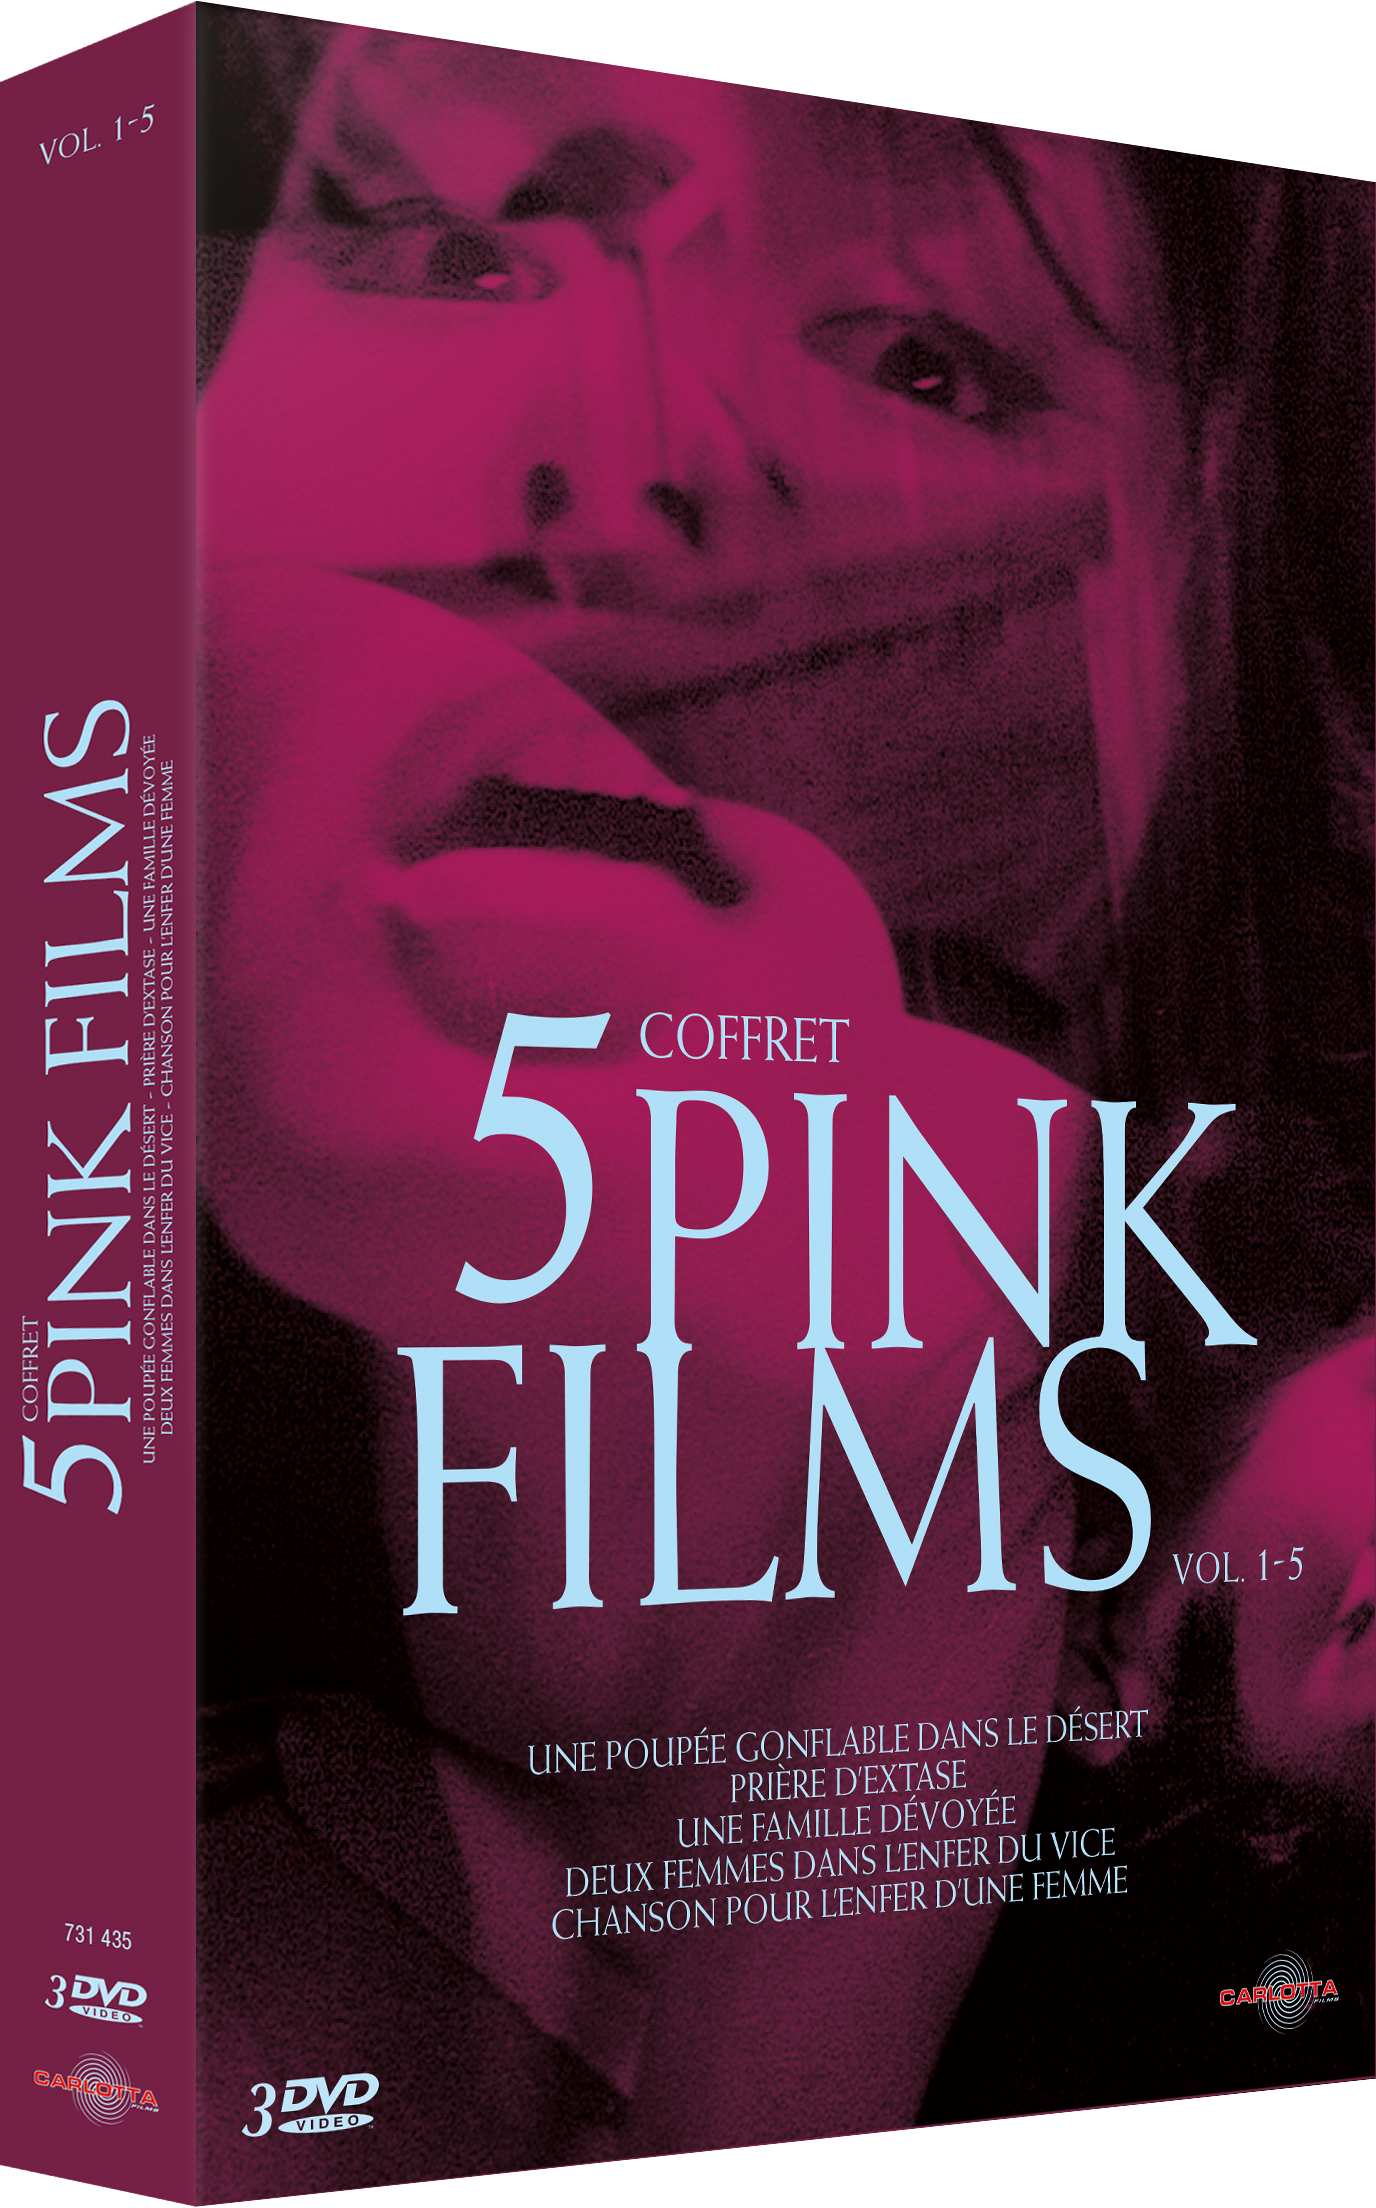 Box 5 Pink Films